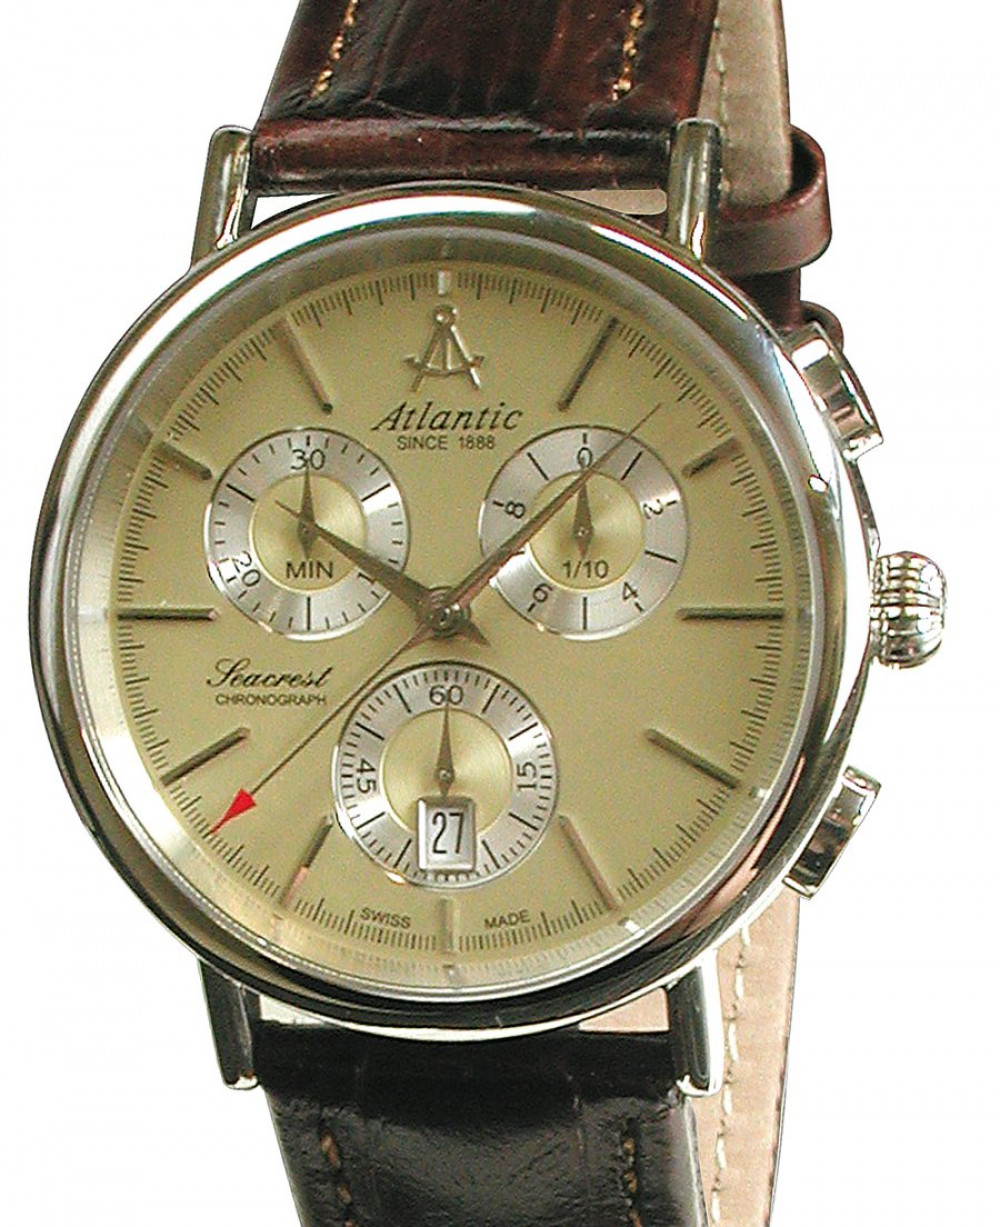 Zegarek firmy Atlantic, model Seacrest Chrono